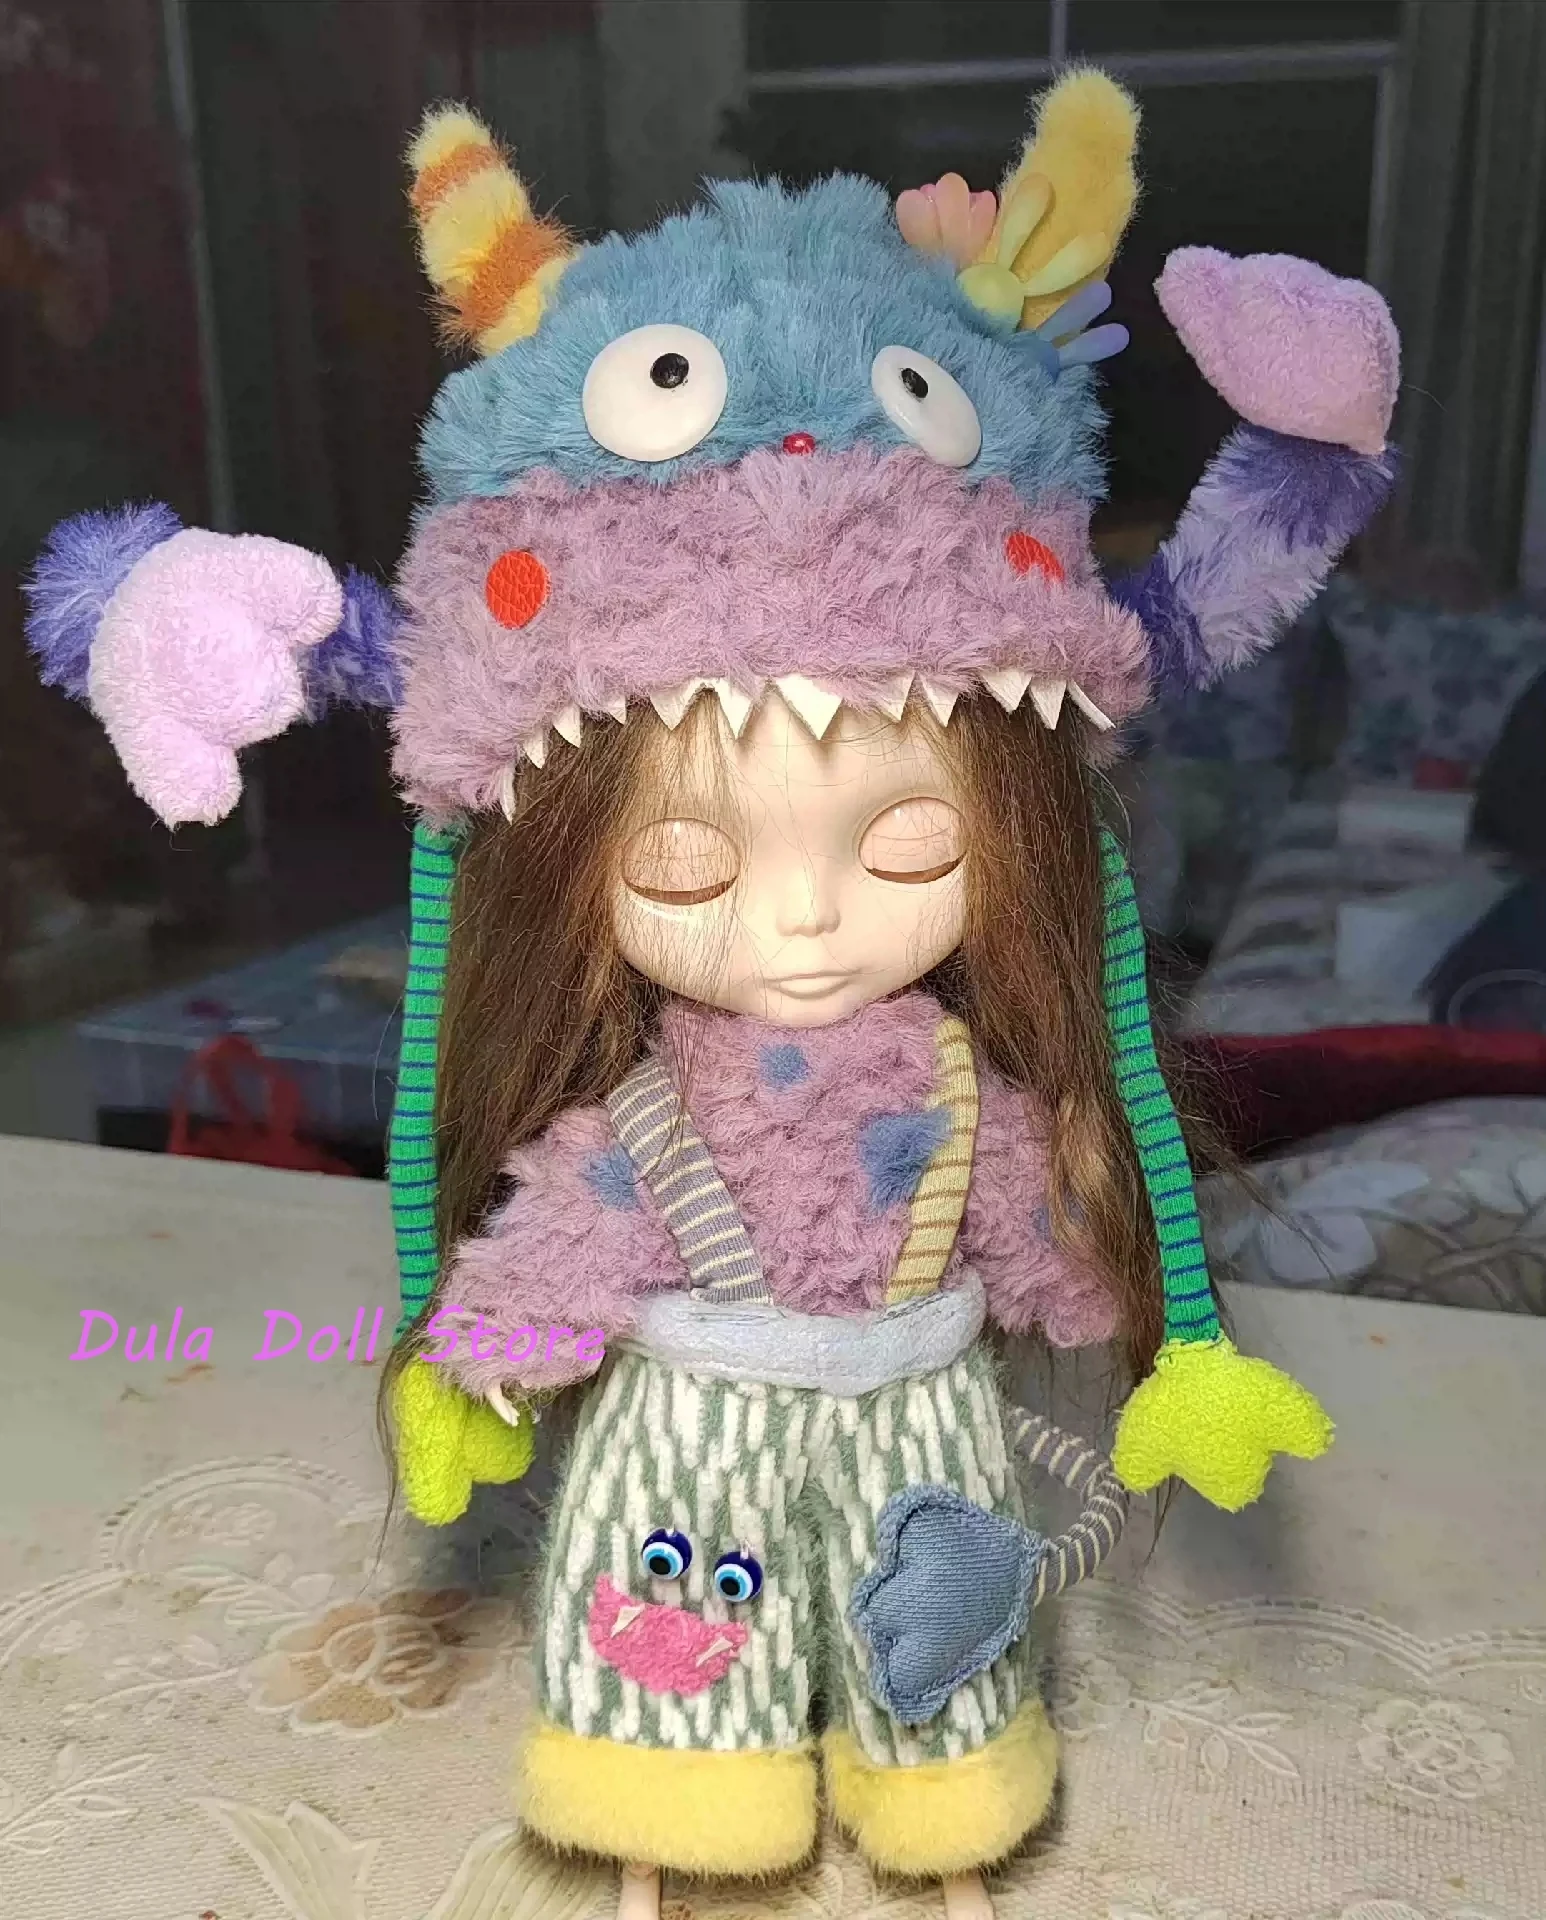 

Dula Doll Clothes Dress Plush Monster Set Blythe ob24 ob22 Azone Licca ICY JerryB 1/6 Bjd Doll Accessories